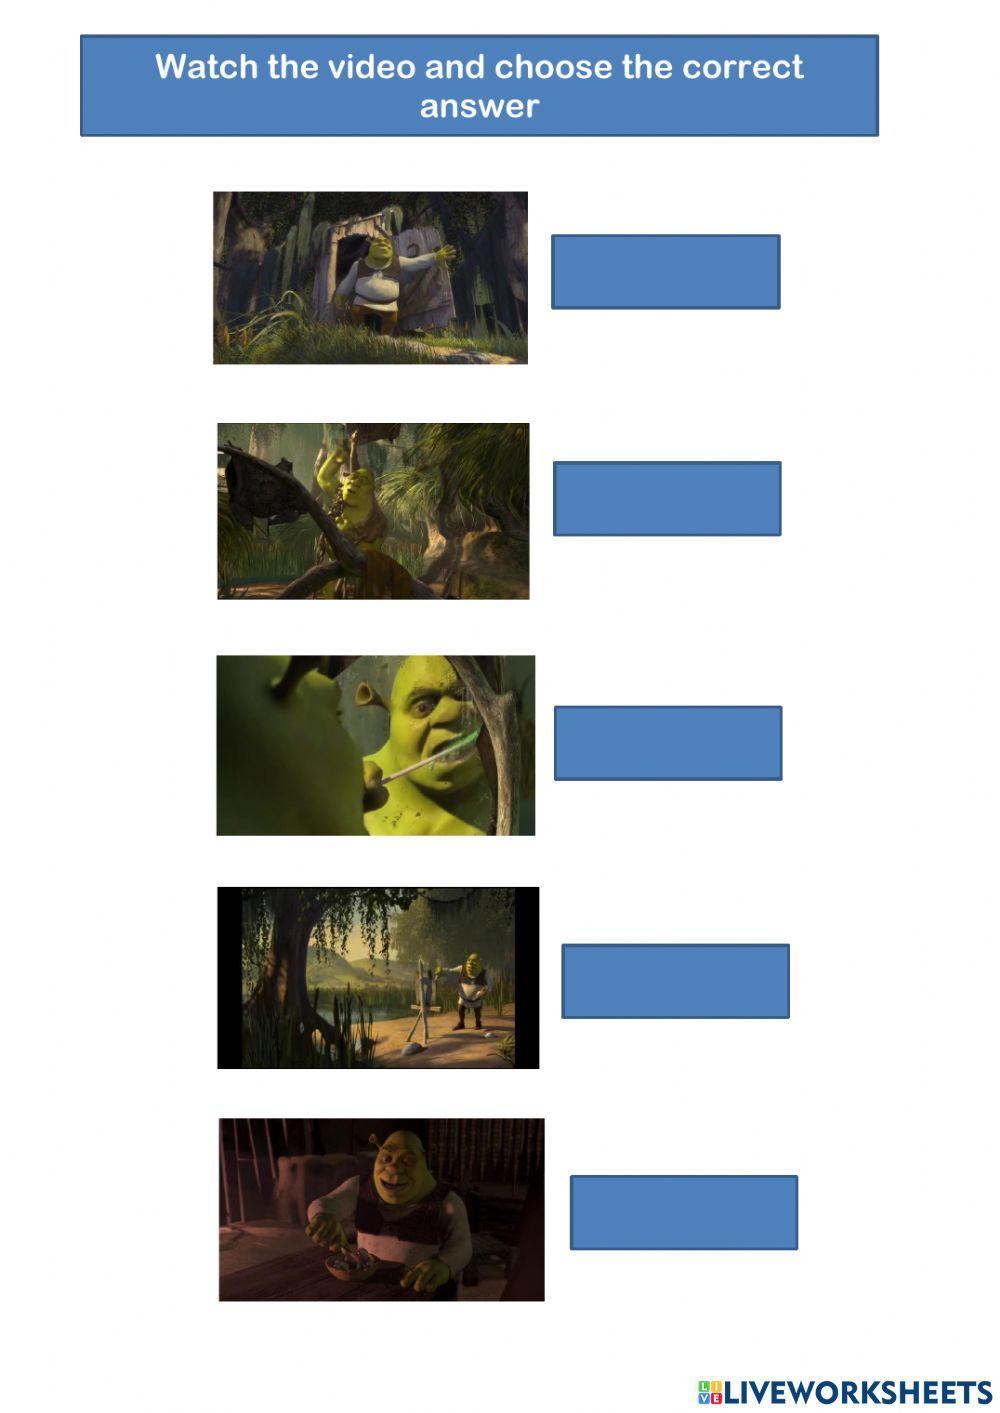 Shreks daily routine